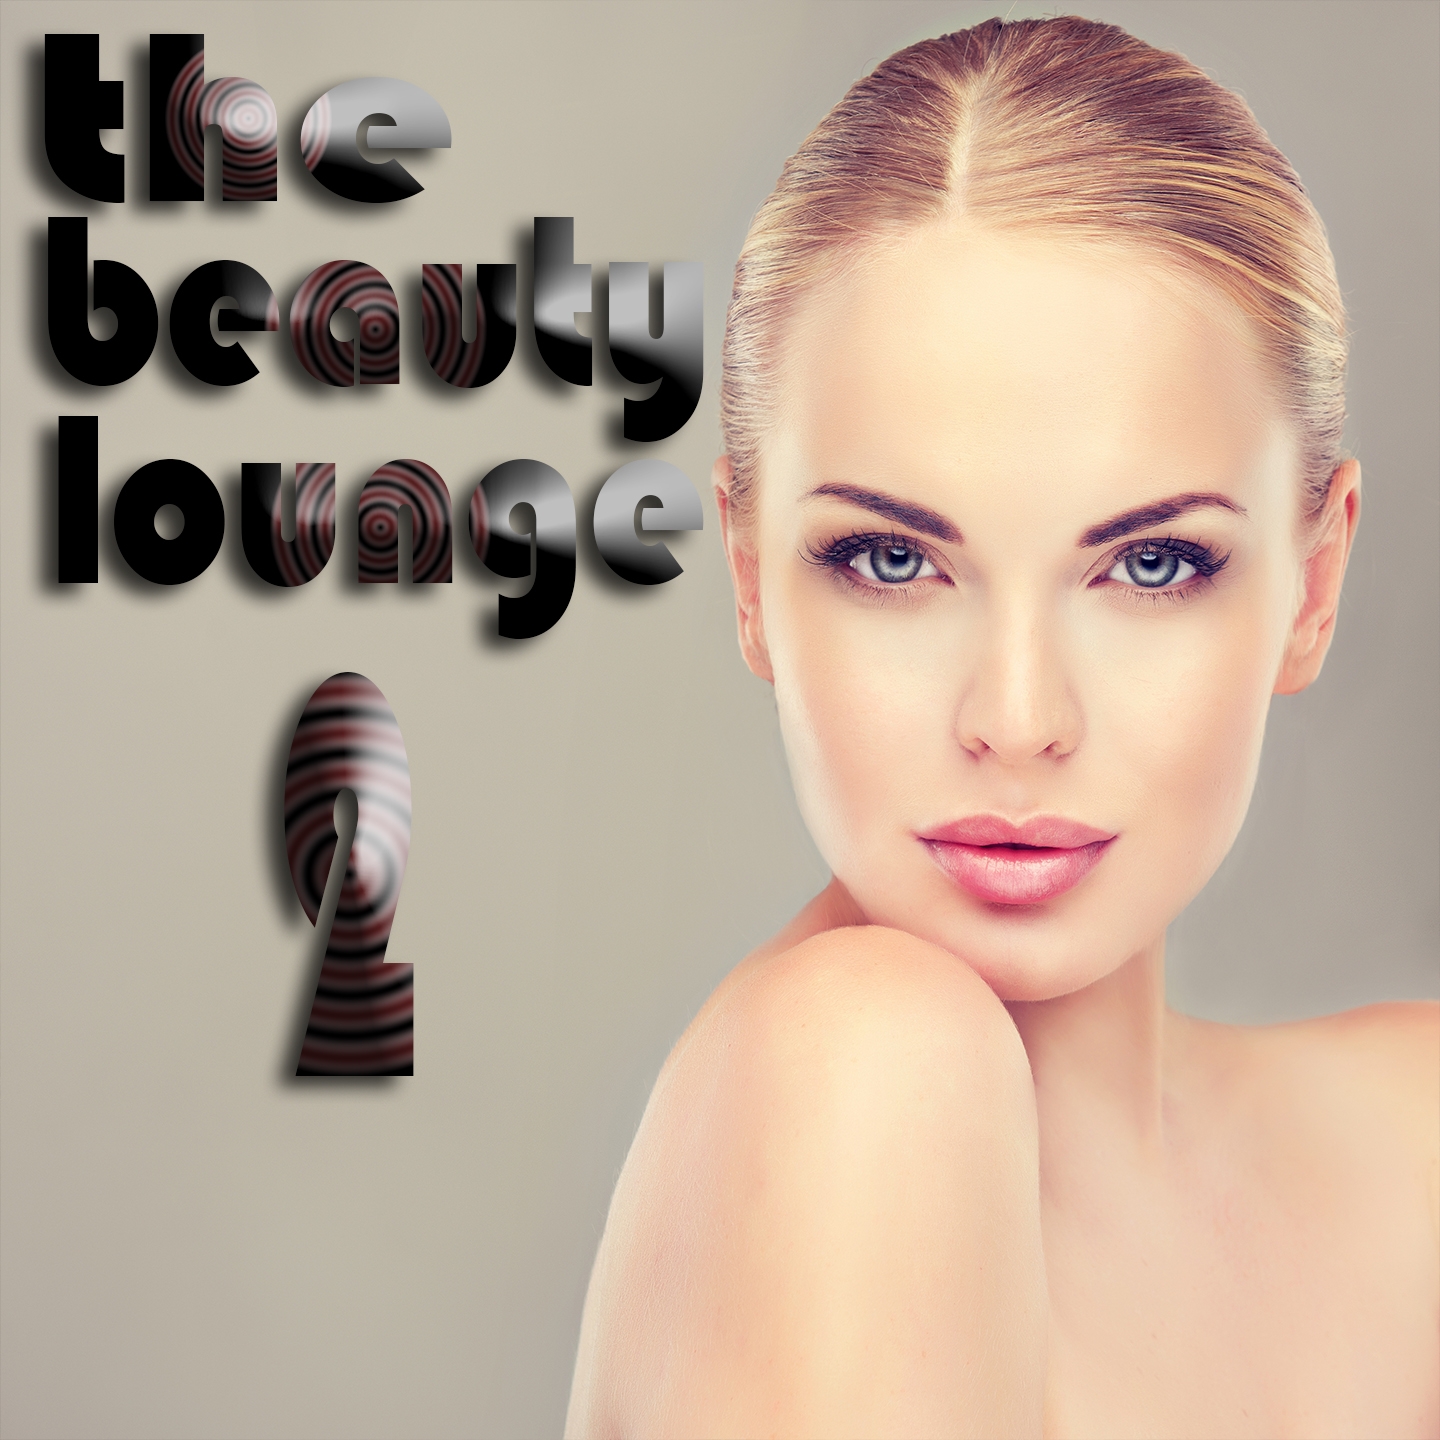 The Beauty Lounge Vol.2